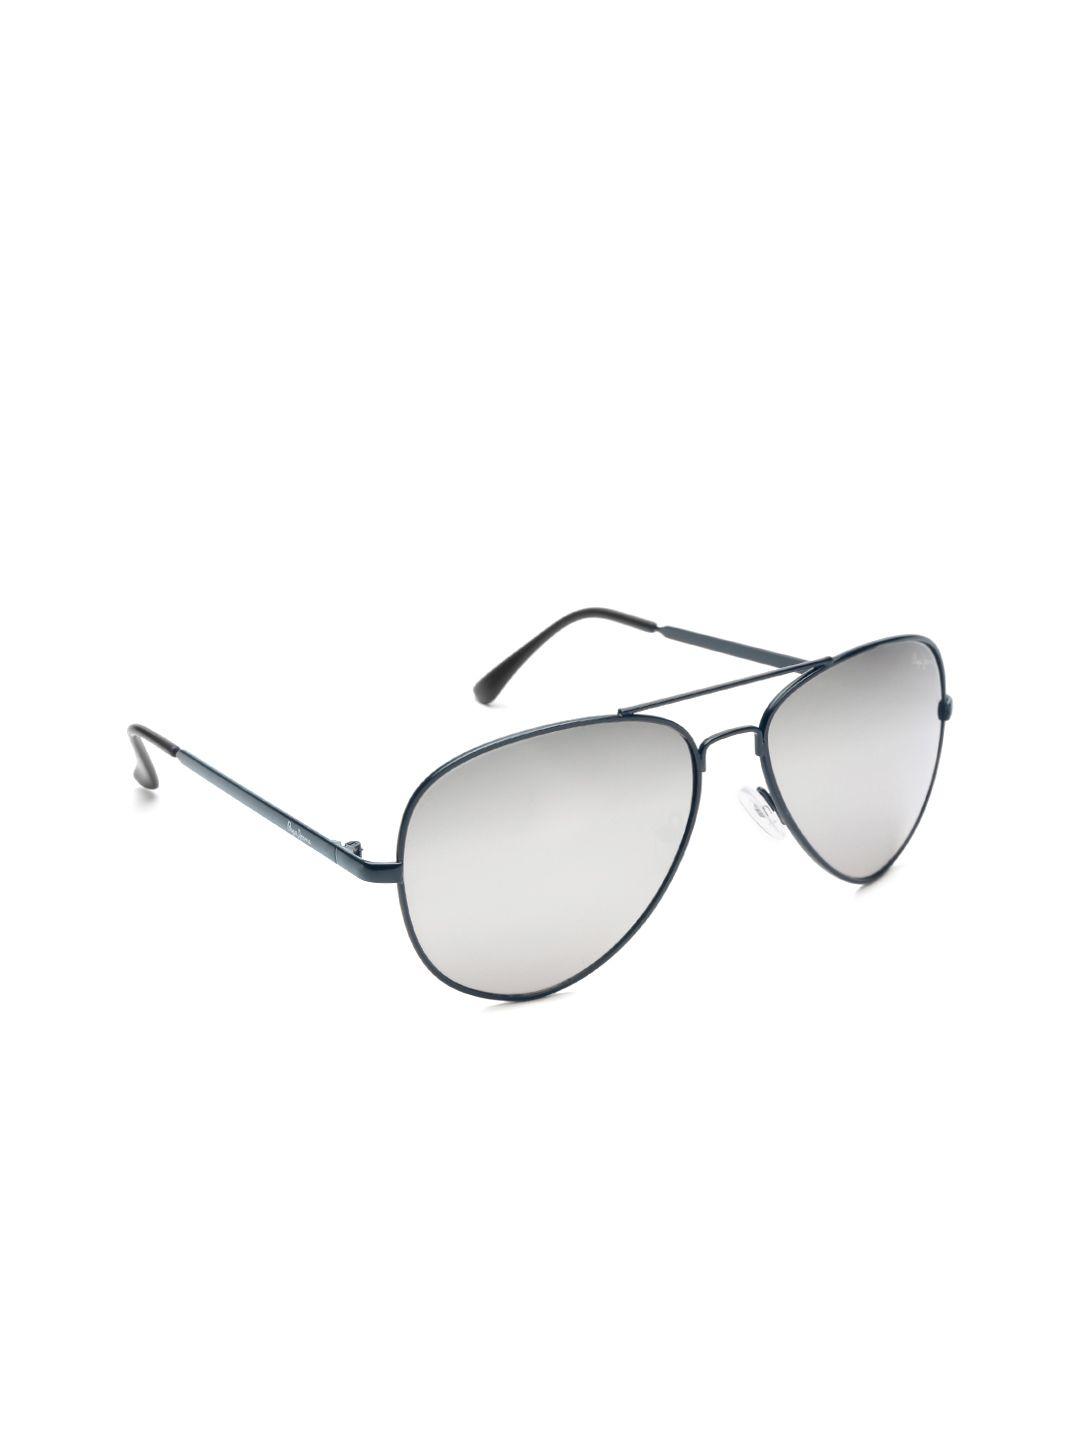 pepe-jeans-unisex-mirrored-aviator-sunglasses-pj5111c1